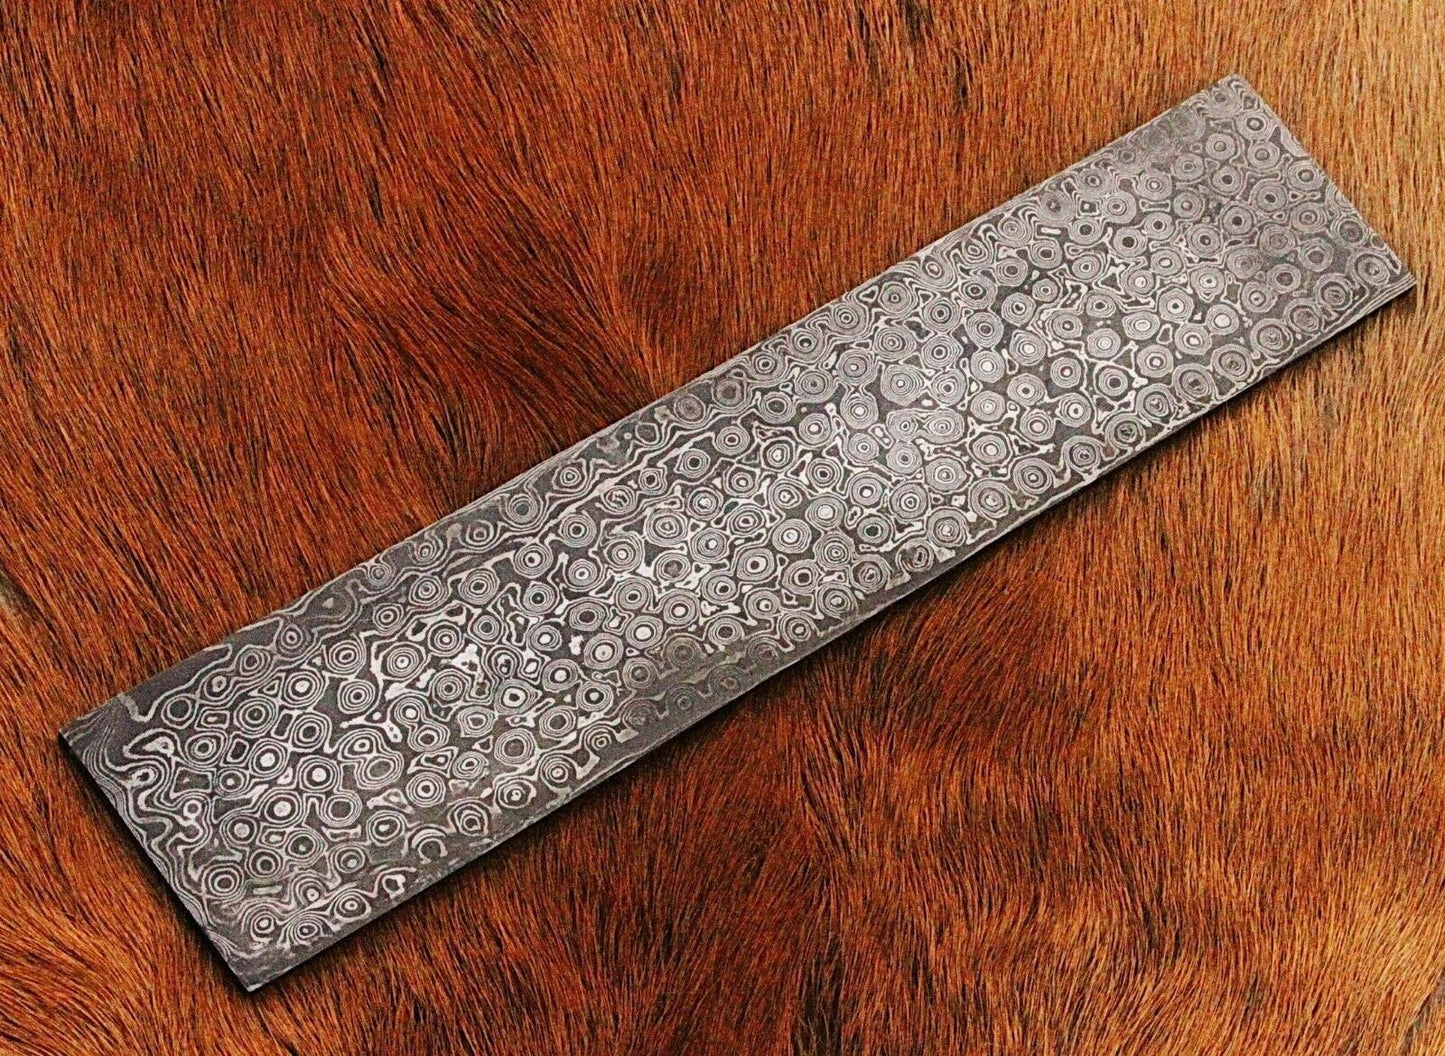 10" Hand Forged Damascus Steel Billet/Bar For Knife Making "Rain Drop Pattern"